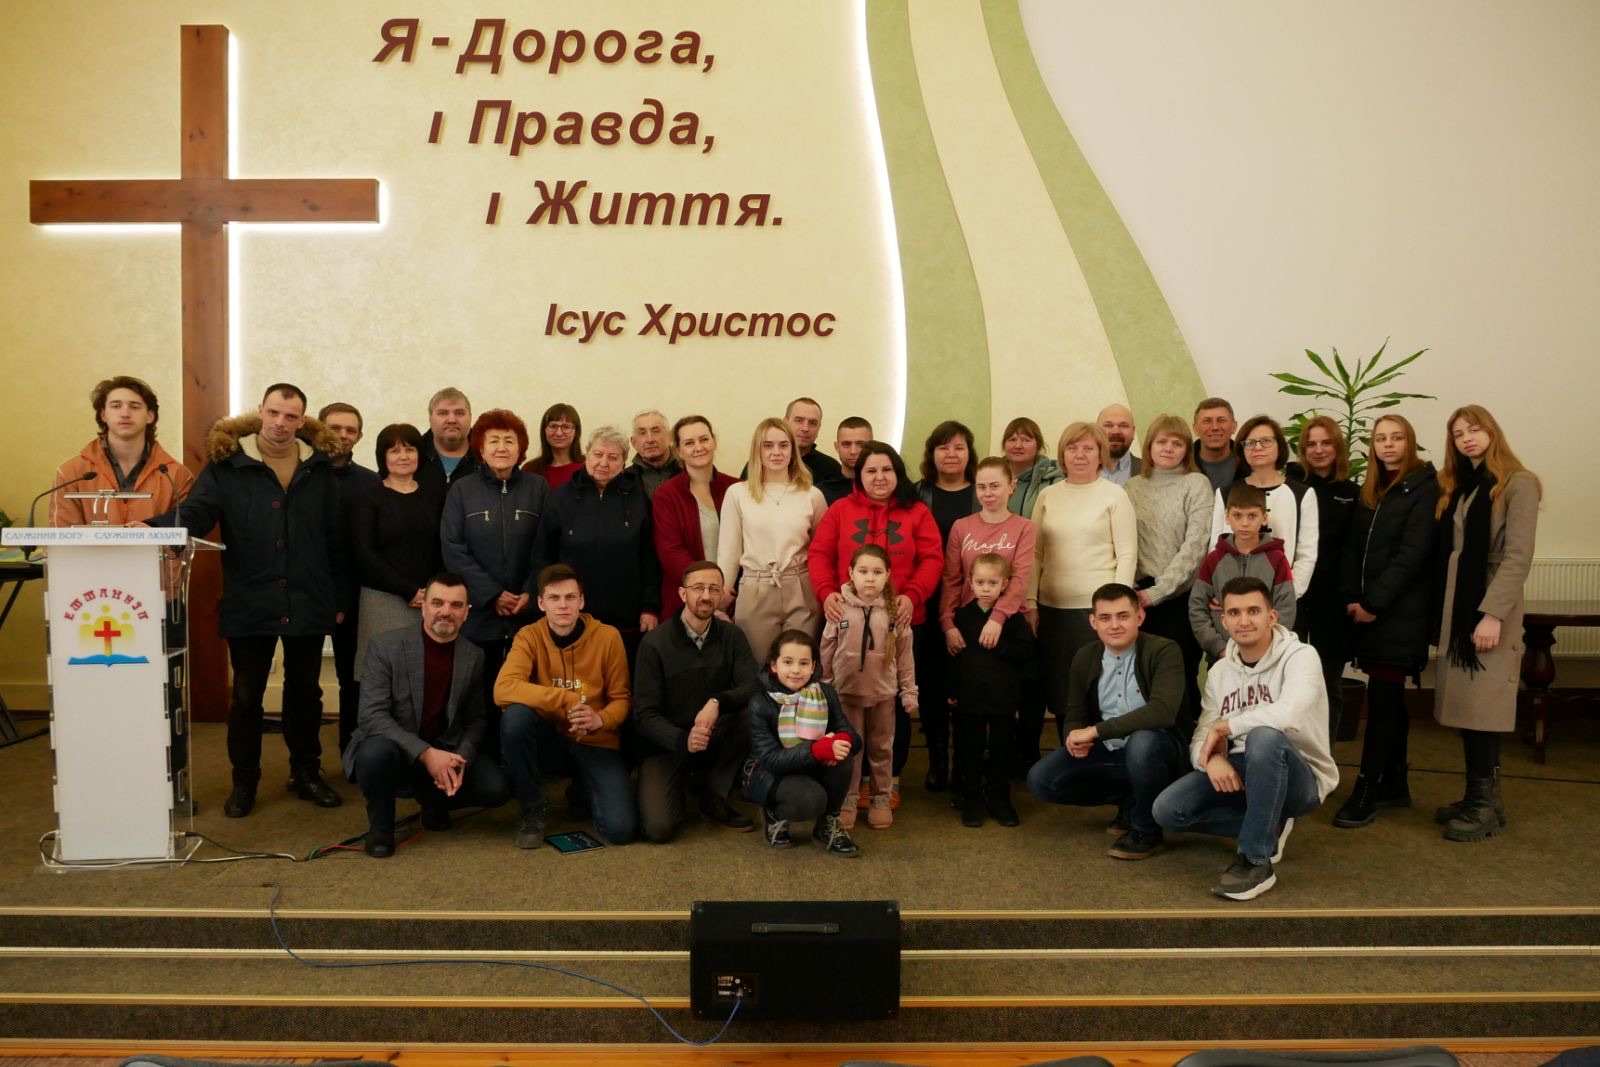 220318 Sga A Church Stands Ready To Receive Ukrainian Refugees2